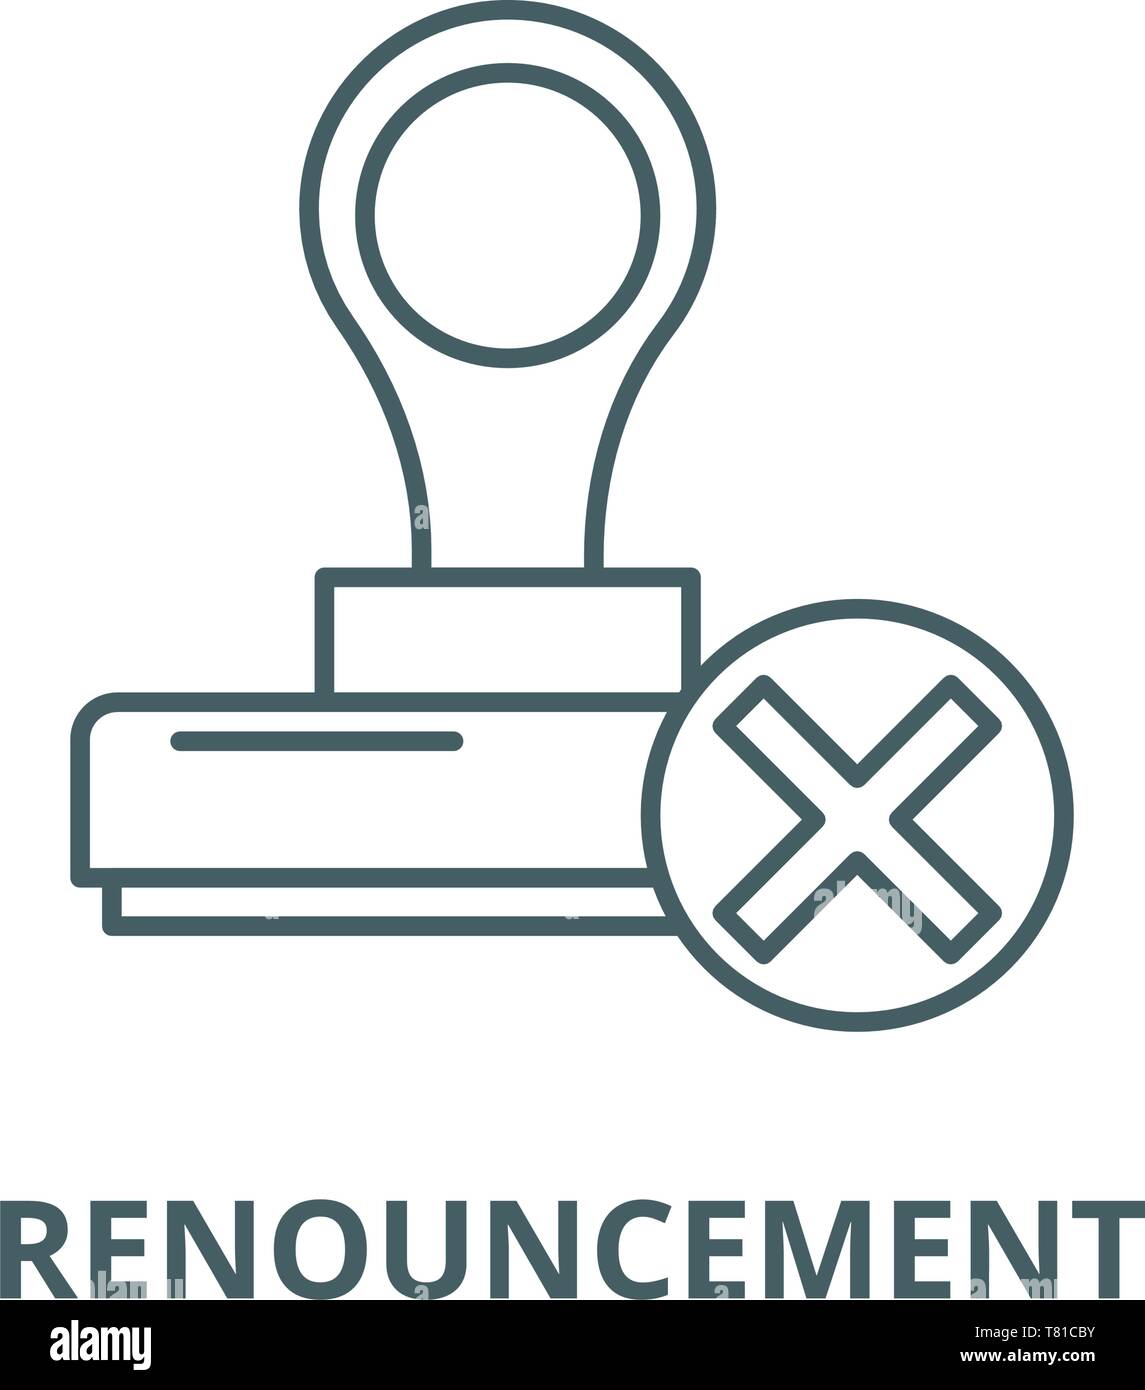 Renouncement vector line icon, linear concept, outline sign, symbol Stock Vector